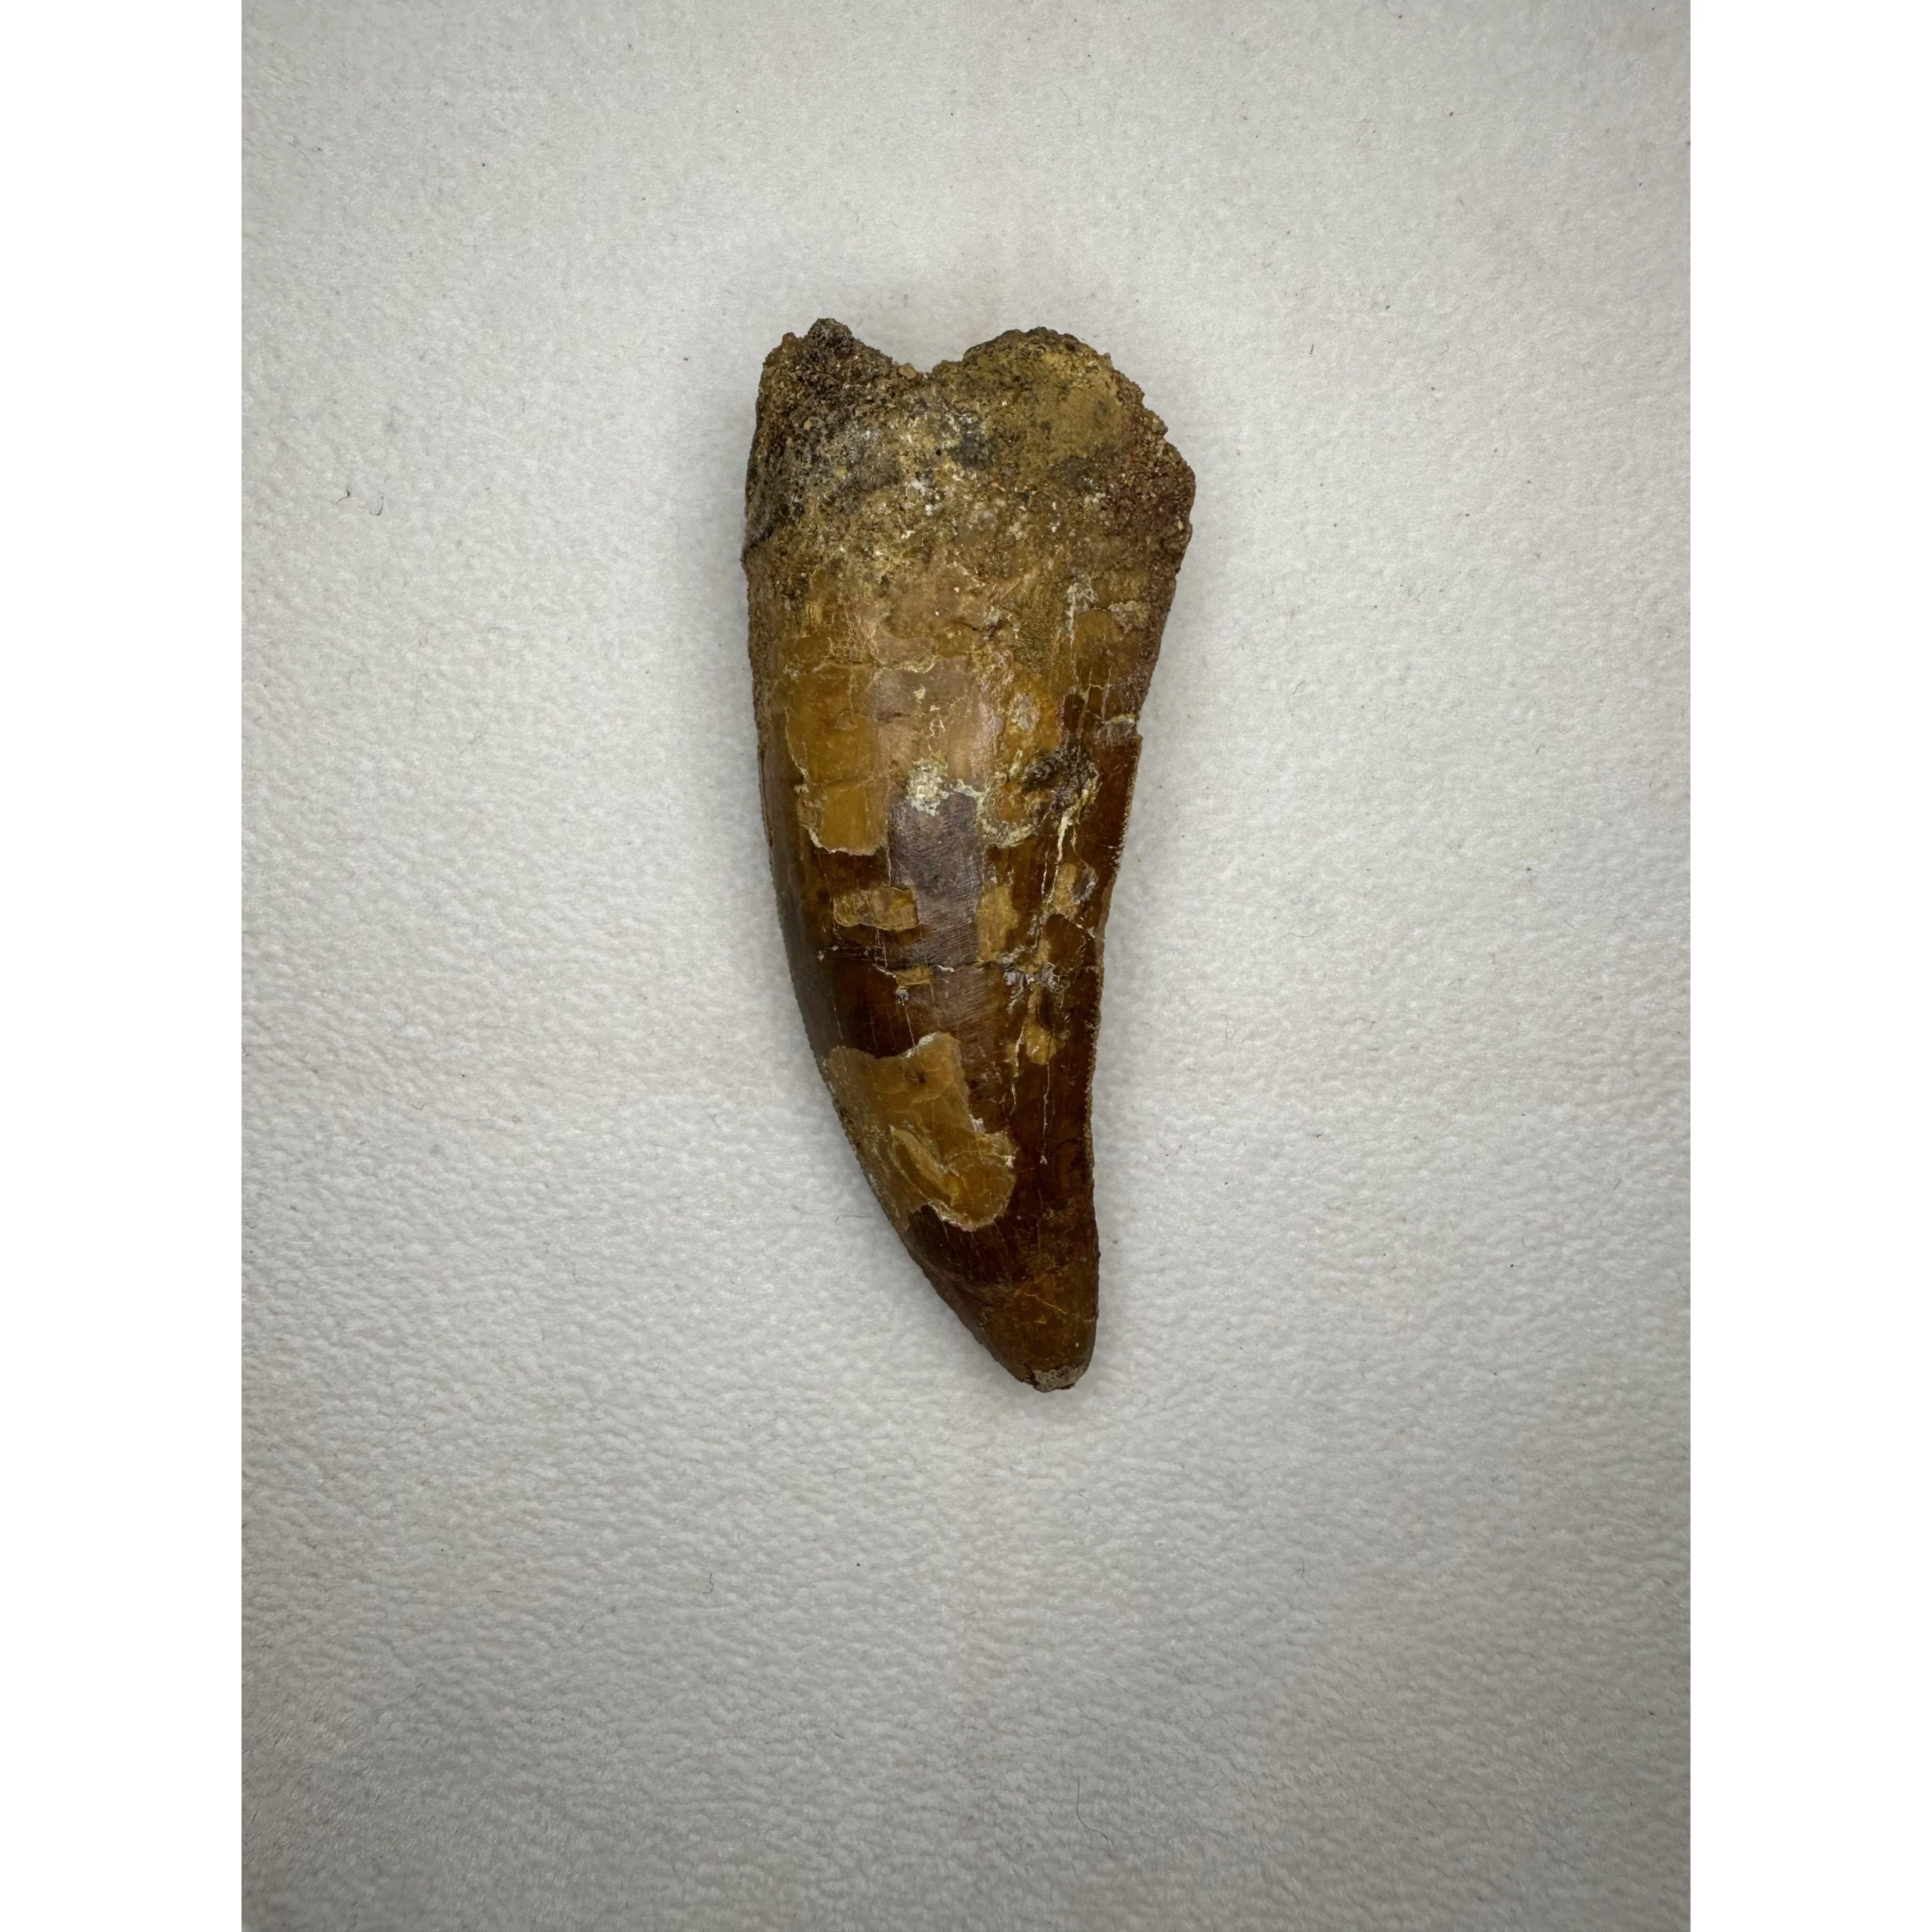 Carcharodontosaurus tooth, value 3″ fossil Prehistoric Online